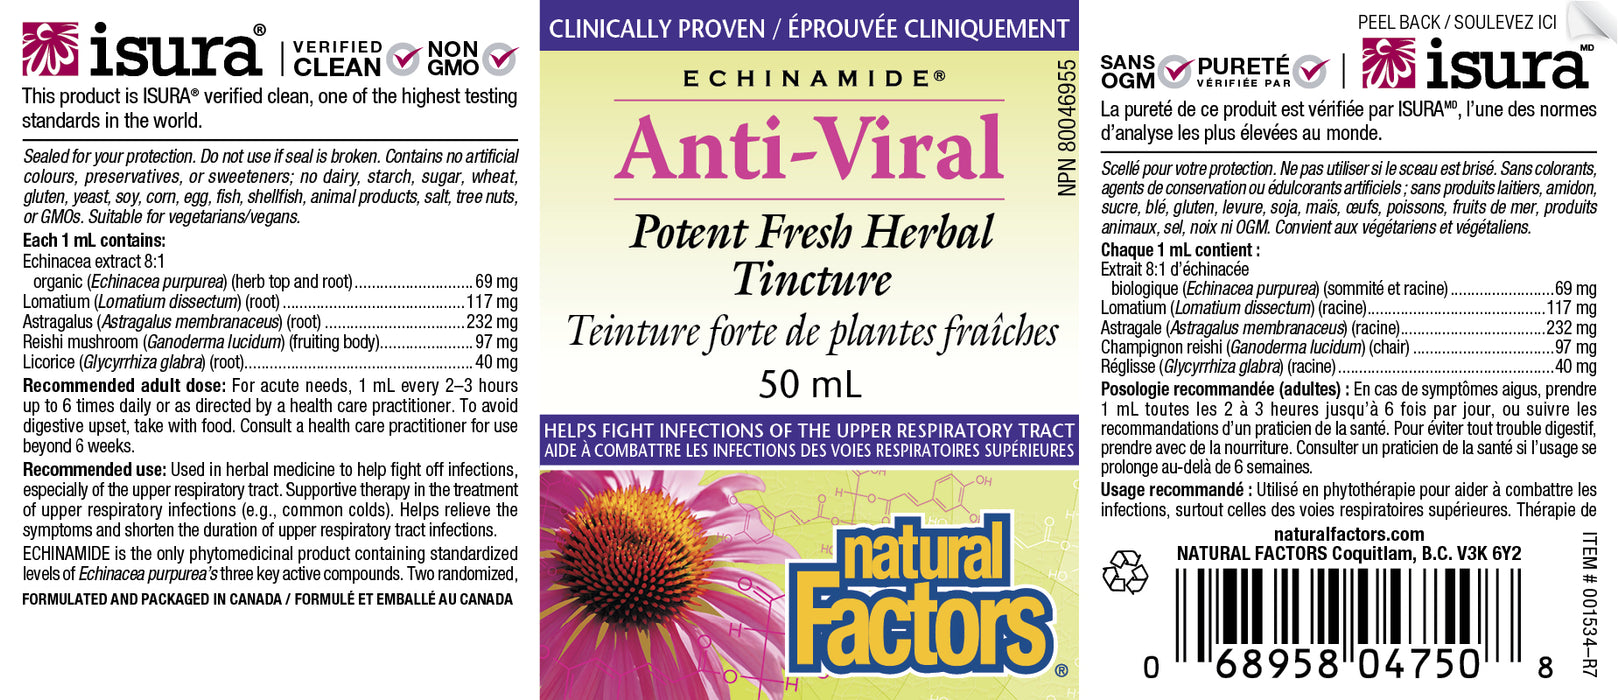 Natural Factors Echinamide Anti-Viral Potent Fresh Herbal Tincture 50ml